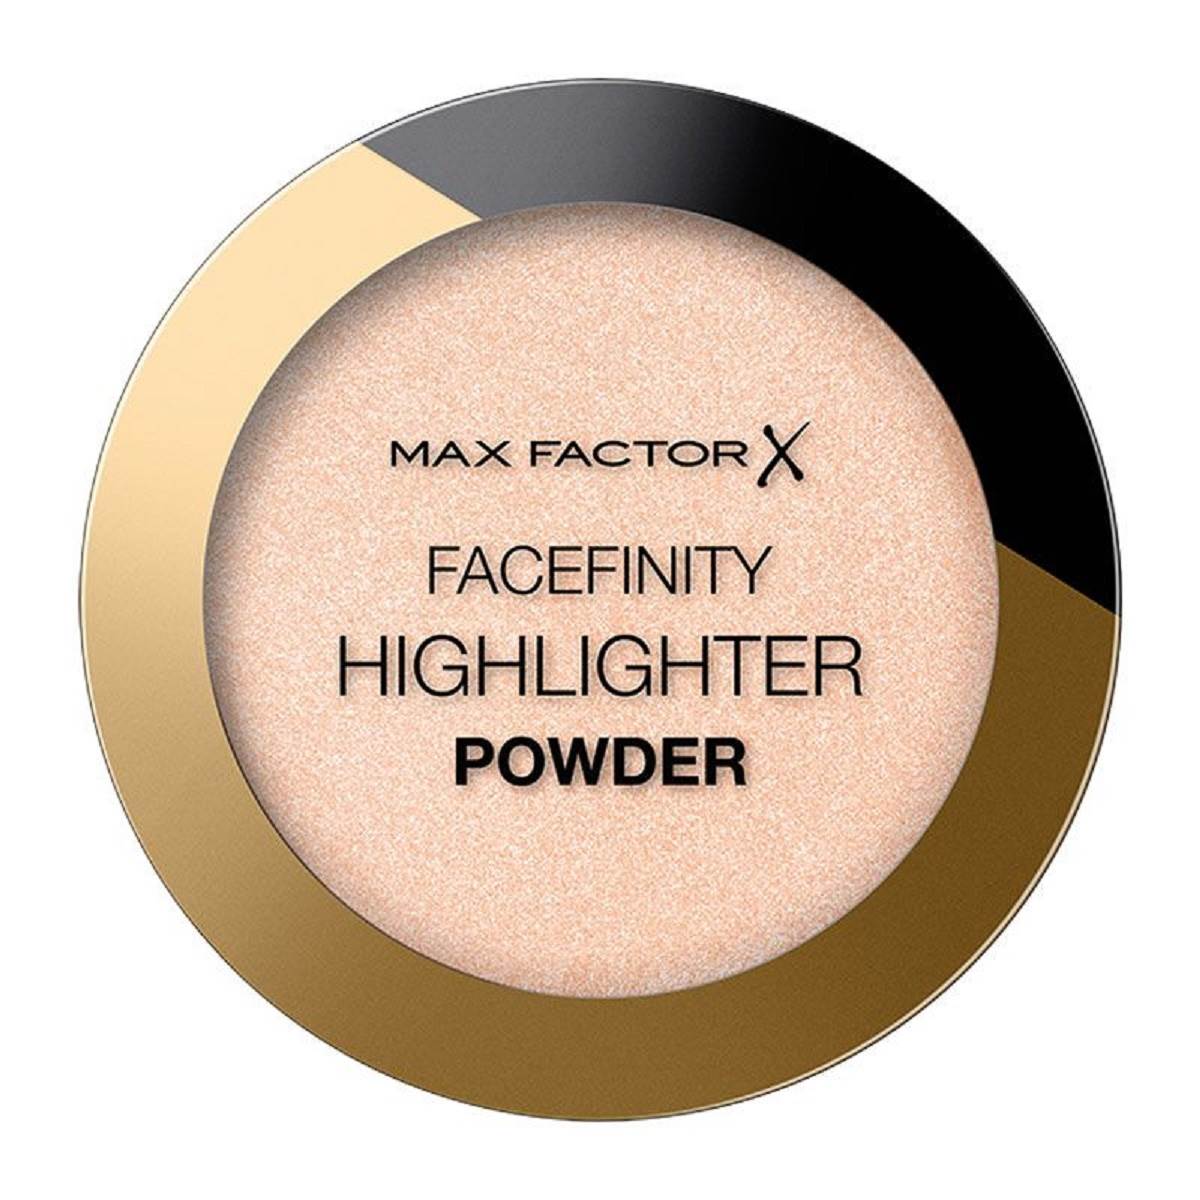  Max Factor Facefinity hajlajter. 